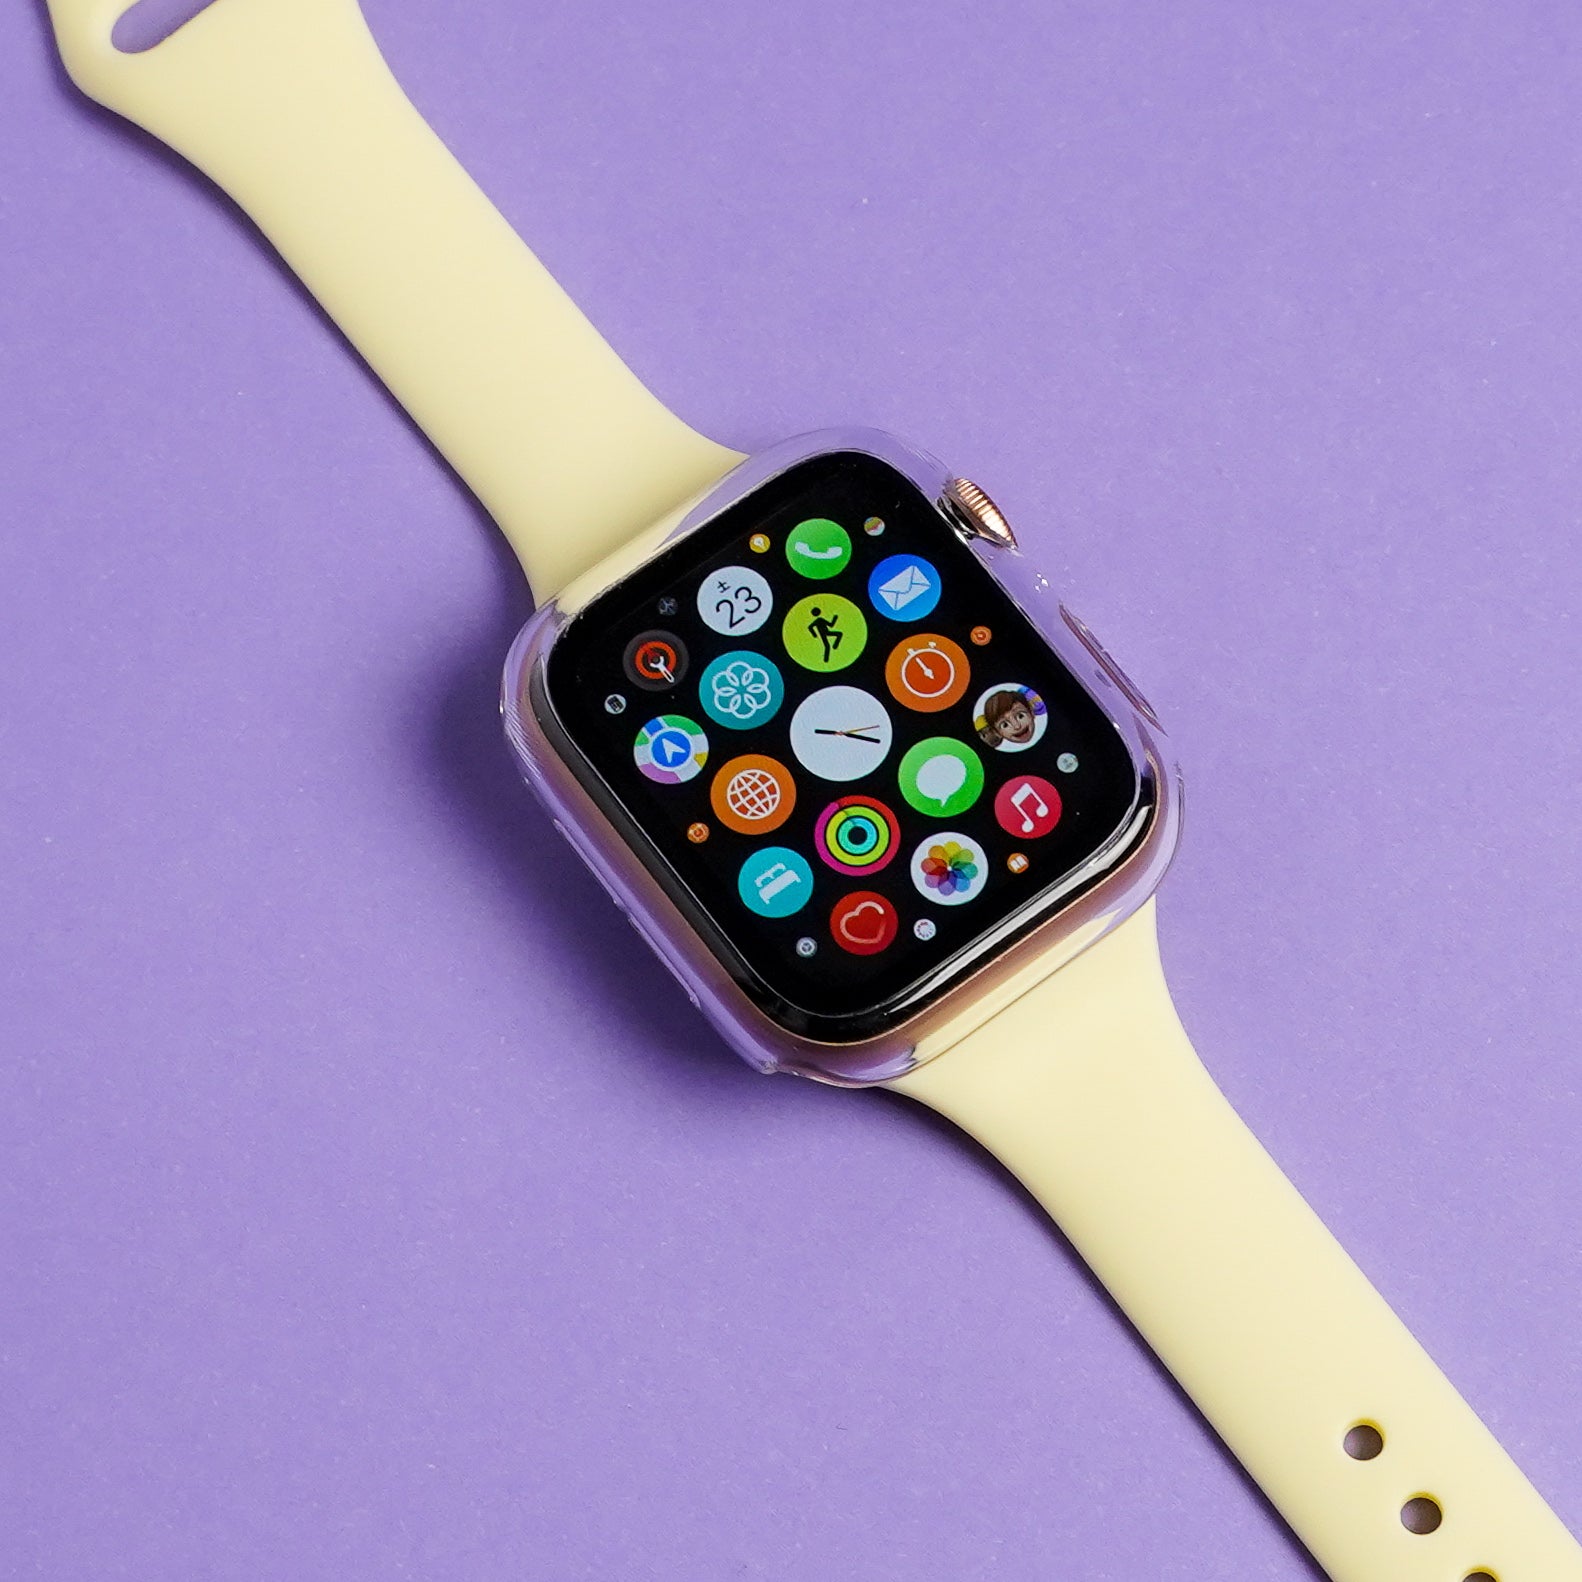 Apple Watch_カジュアルバンド_パープル紫 40mm対応